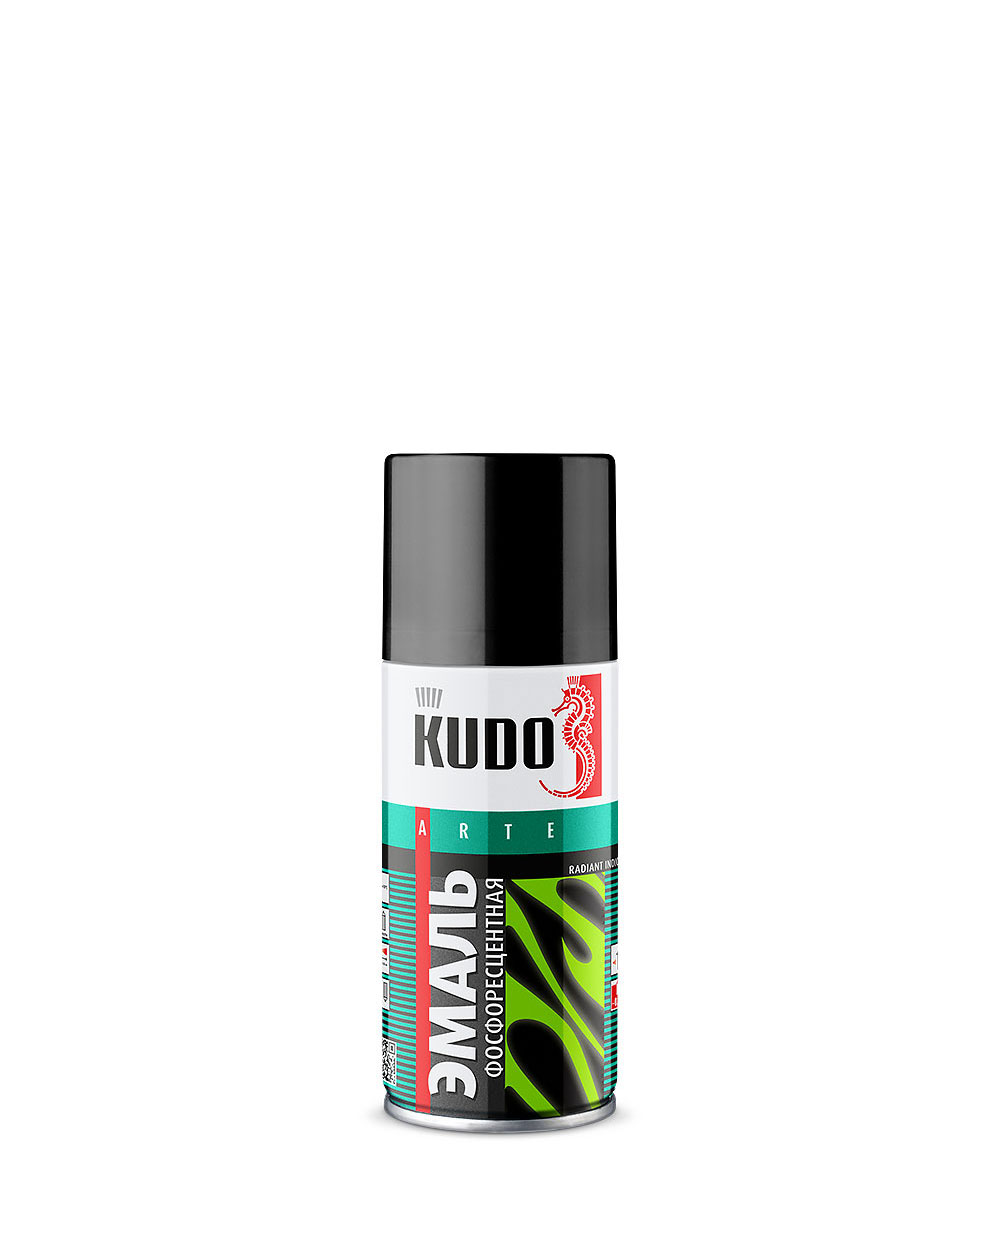 Купить Kudo KU-1250.1, 210 мл